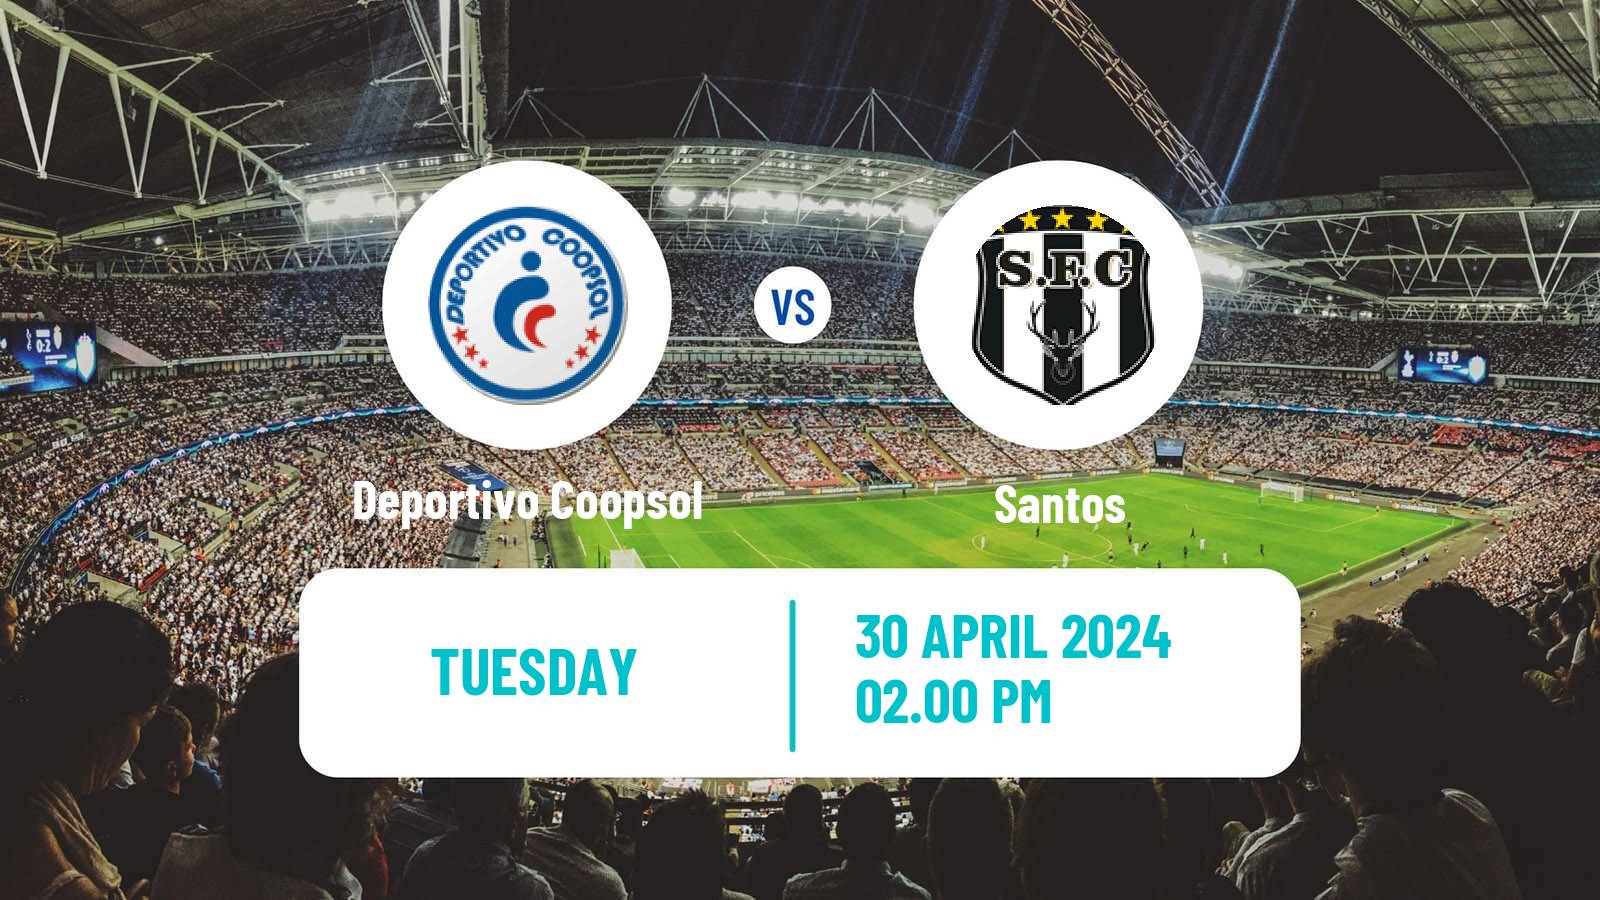 Soccer Peruvian Liga 2 Deportivo Coopsol - Santos